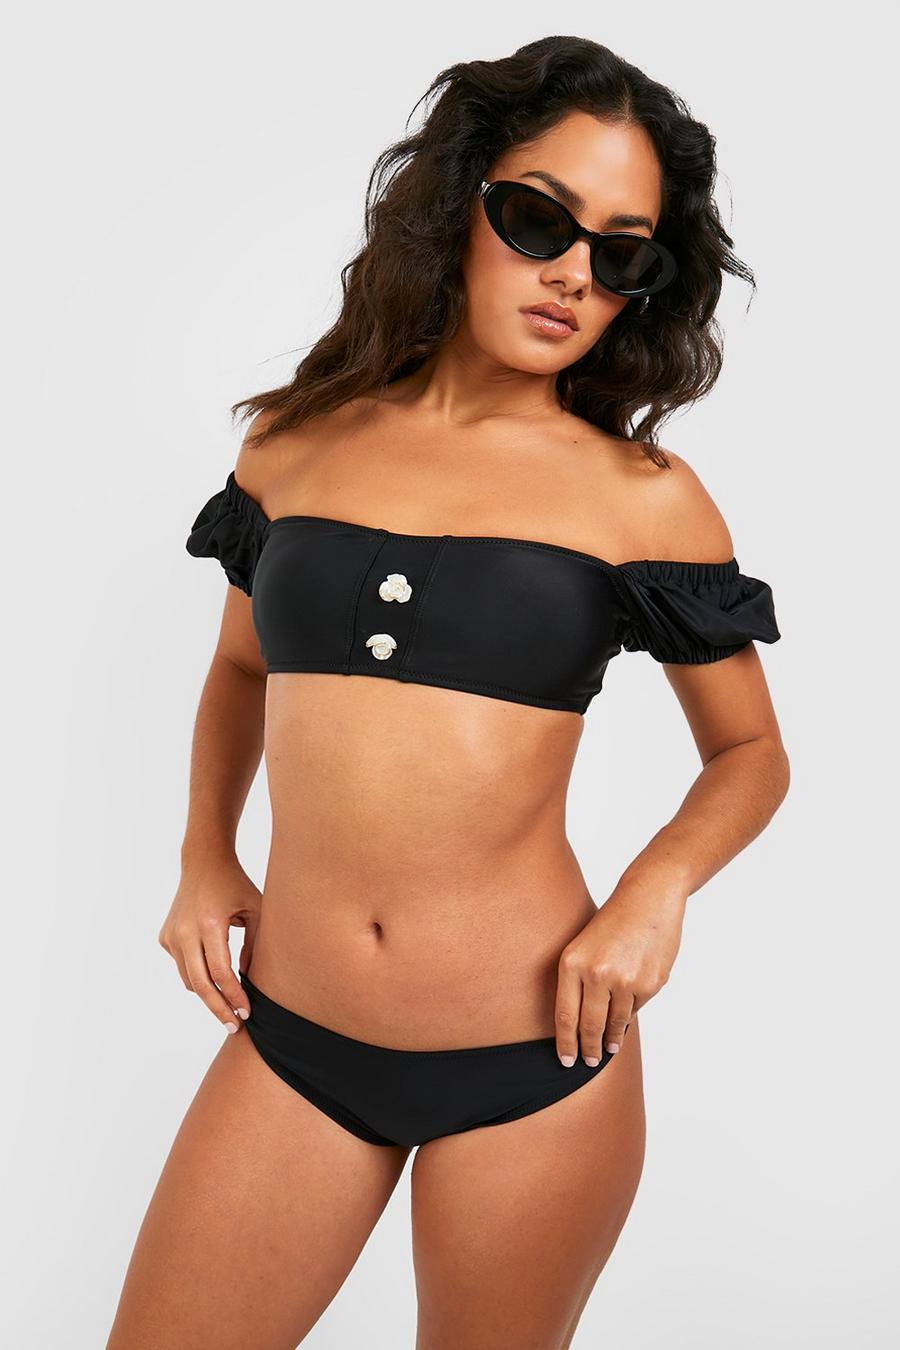 Kurzärmliger gepolsterter Bikini mit Perlen-Detail, Black